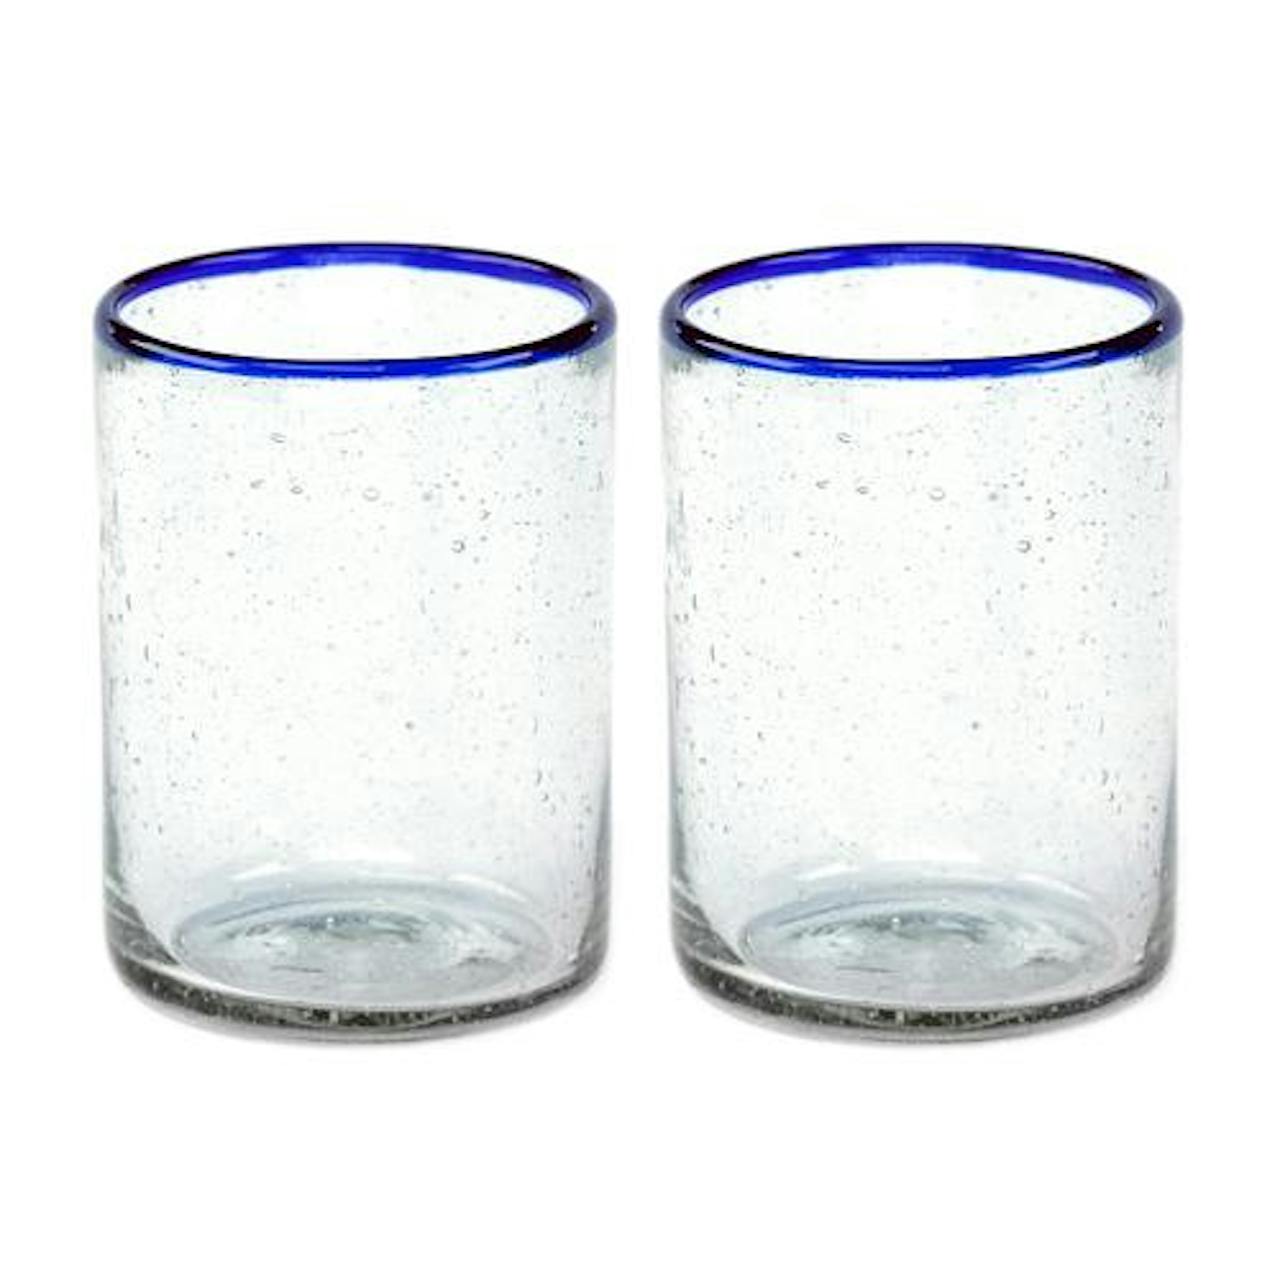 Sobremesa Blue Rim Juice Glass Set